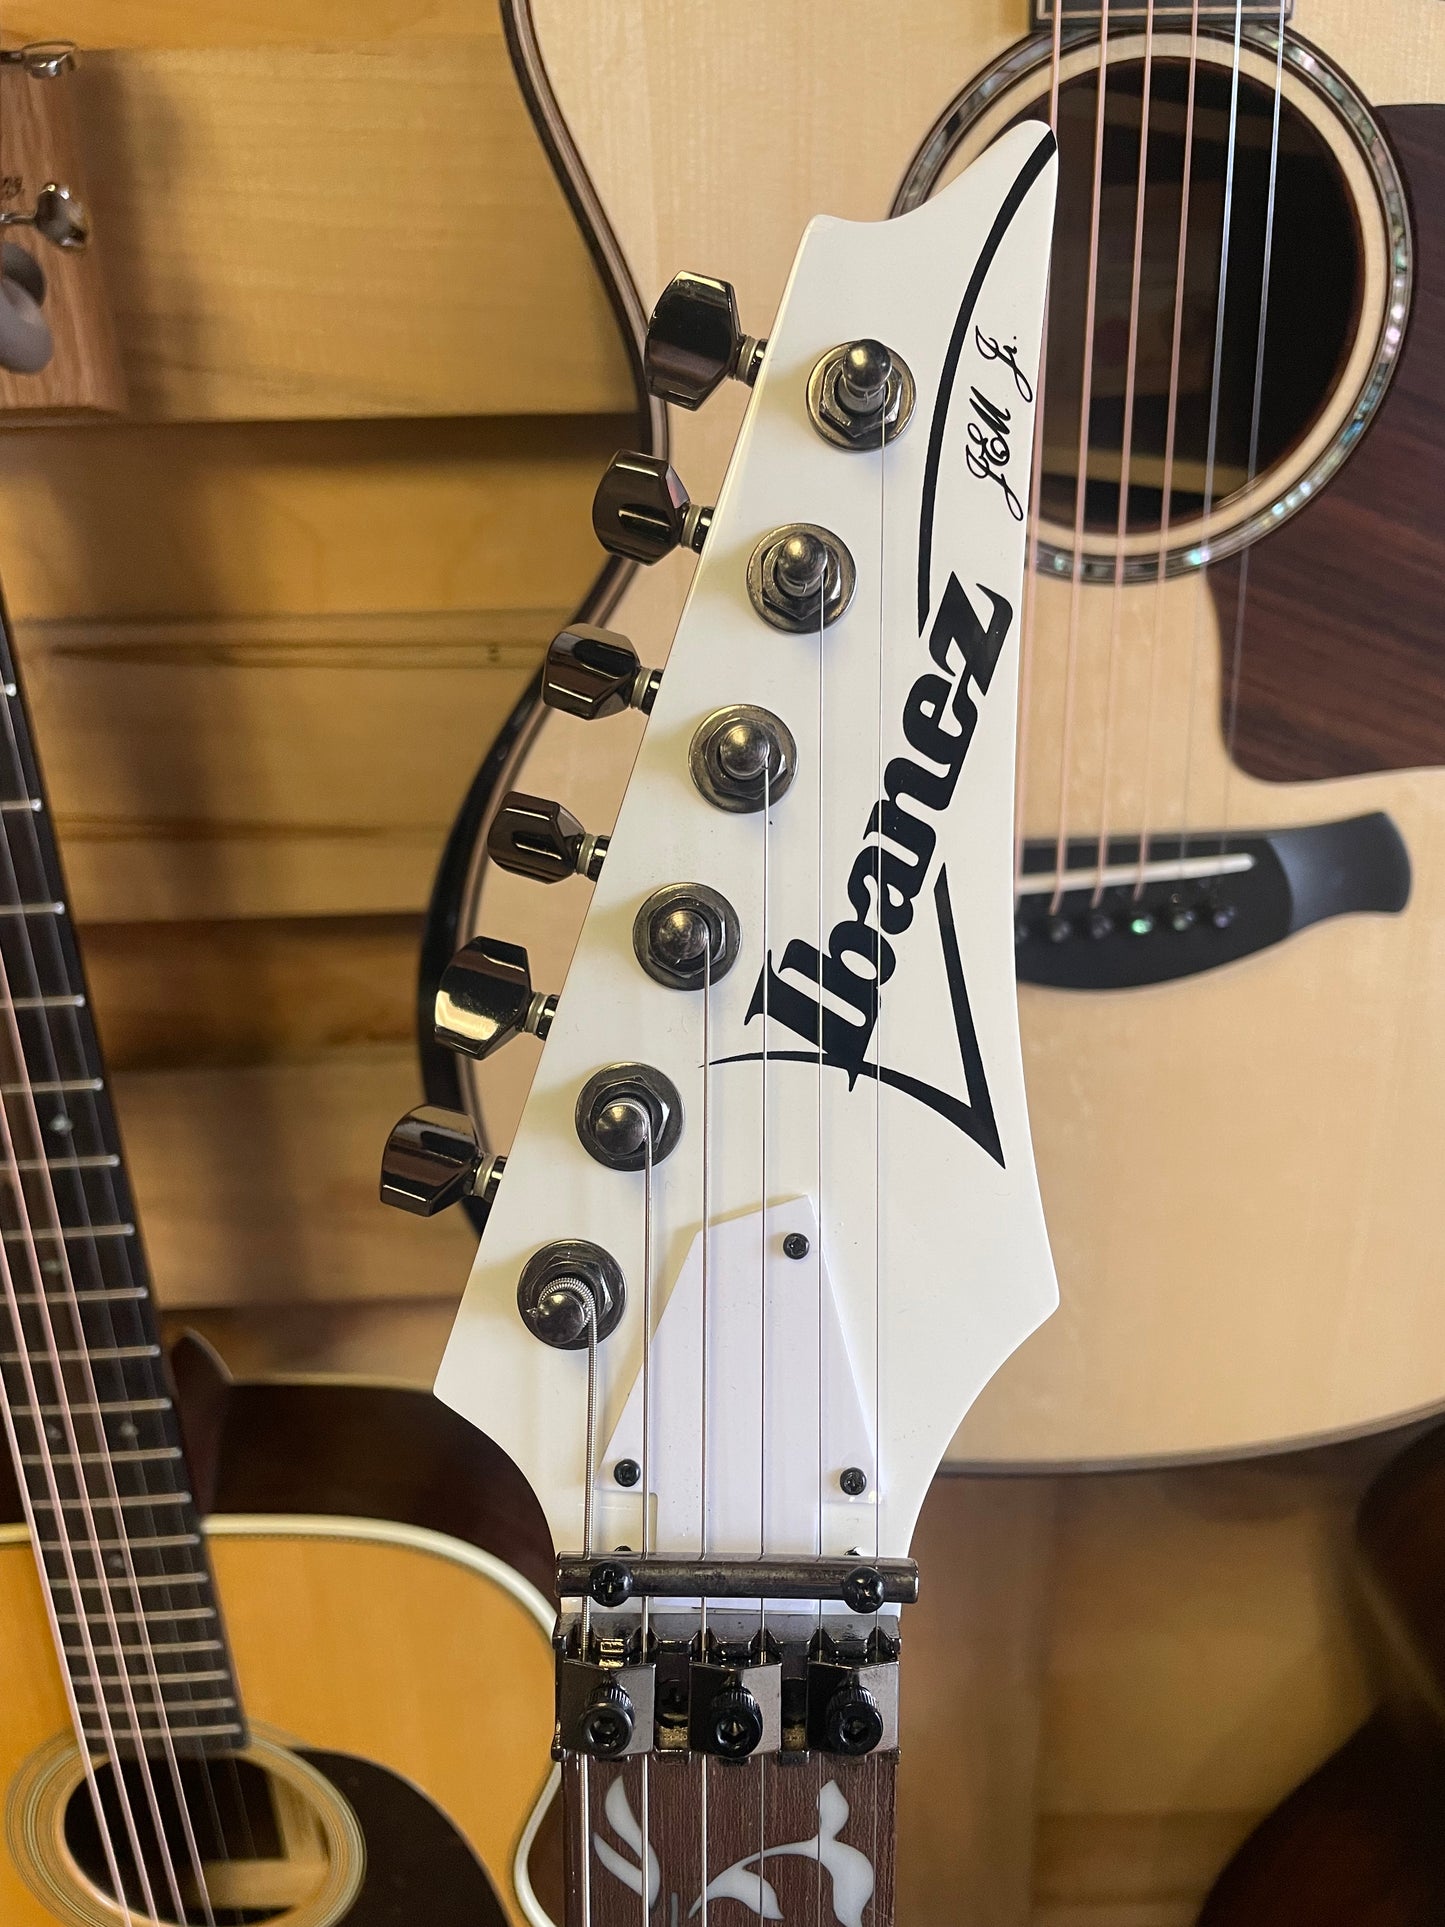 Ibanez JEMJR Steve Vai Signature JEM Series Electric Guitar White (NEW)